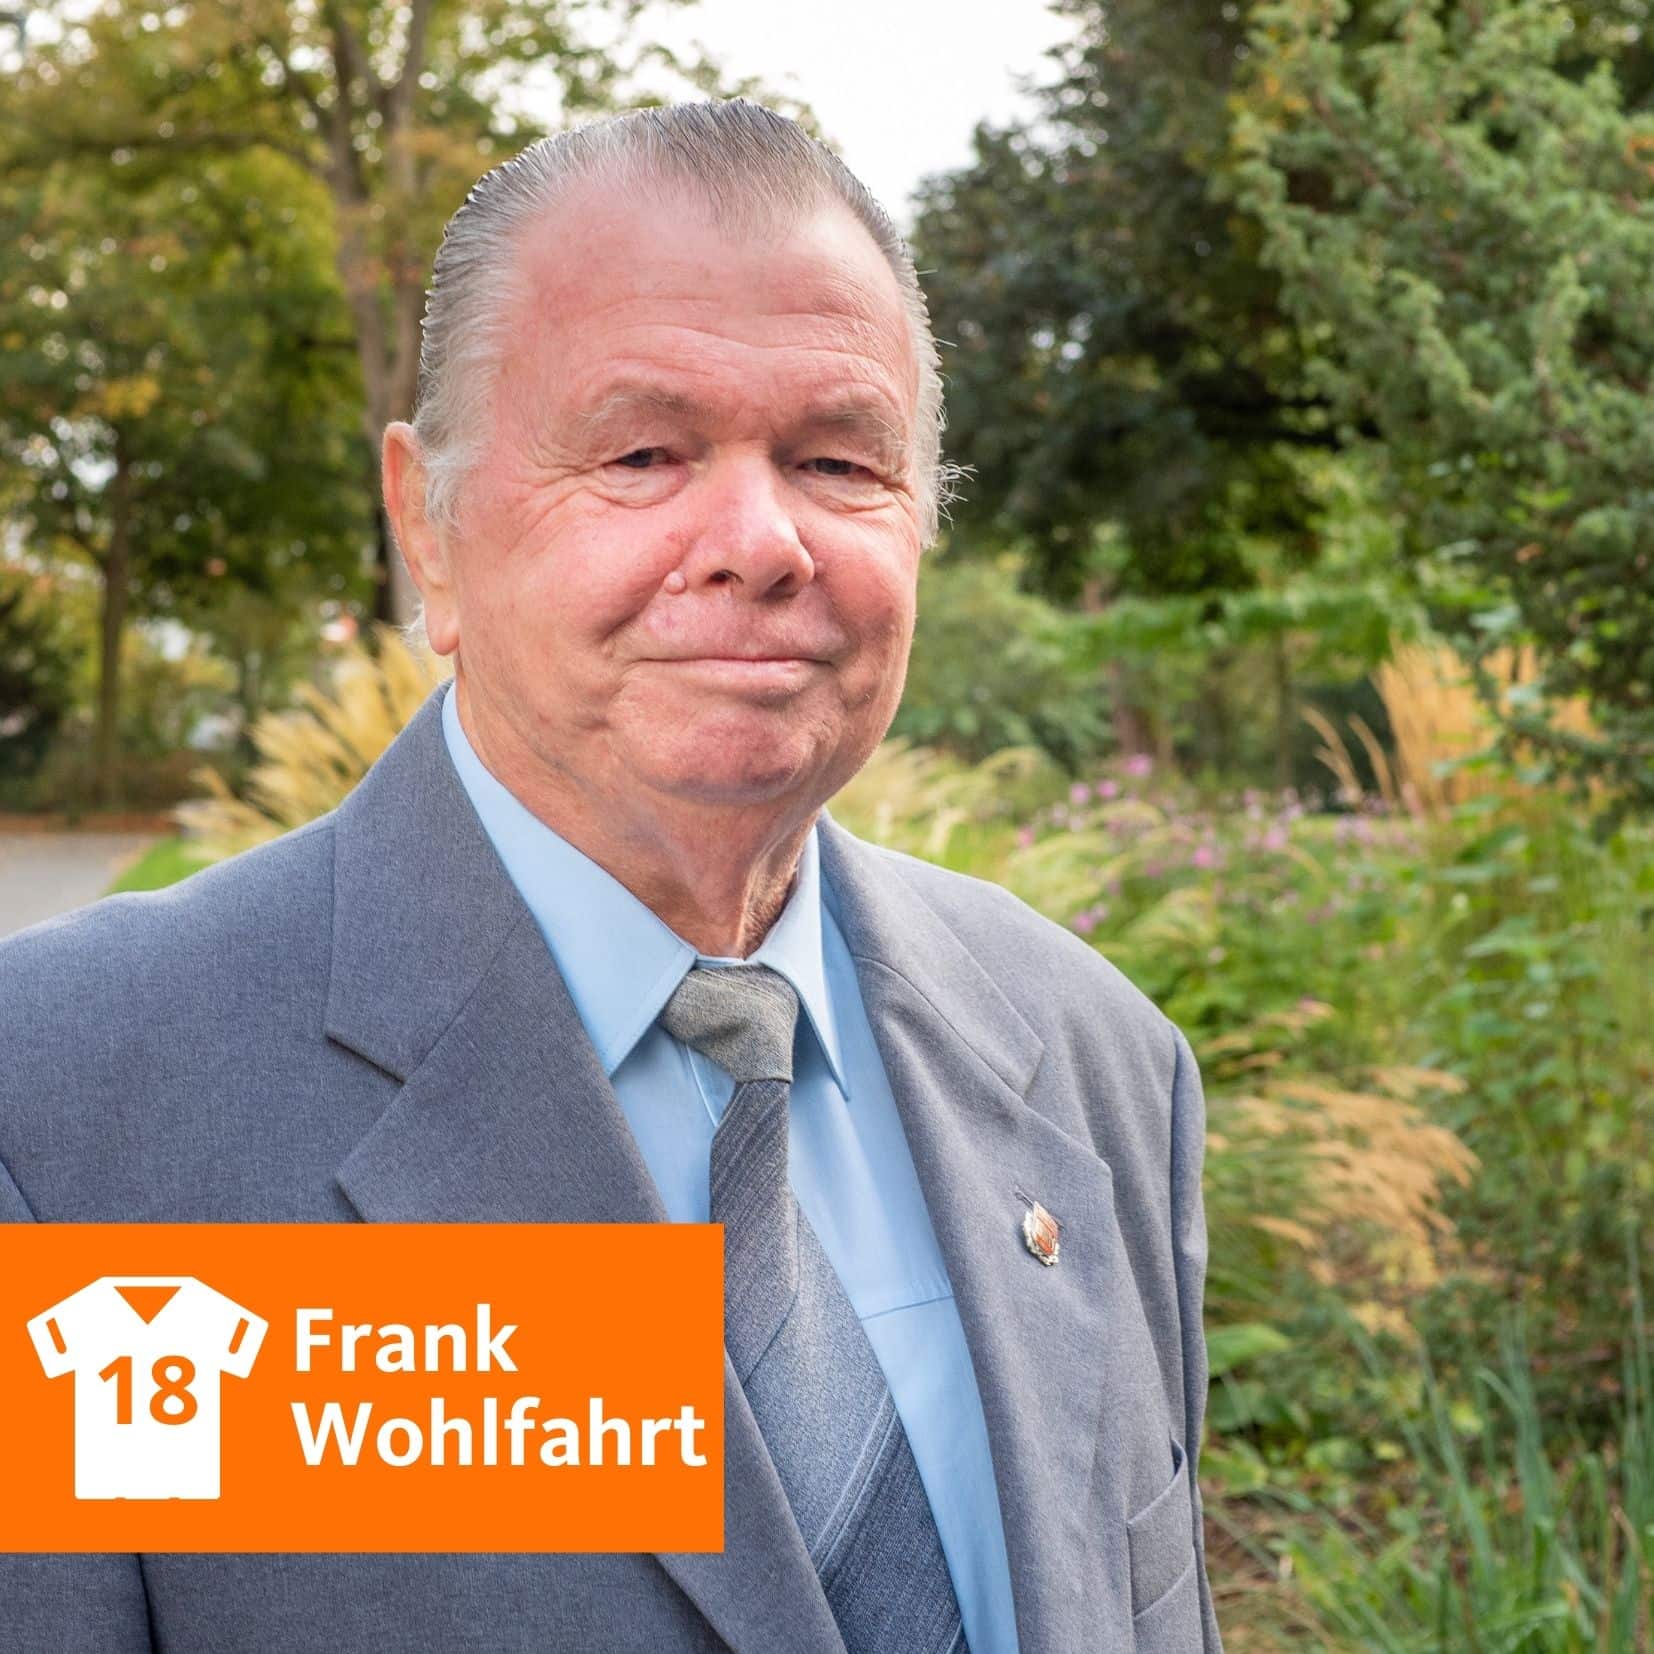 Frank Wohlfahrt